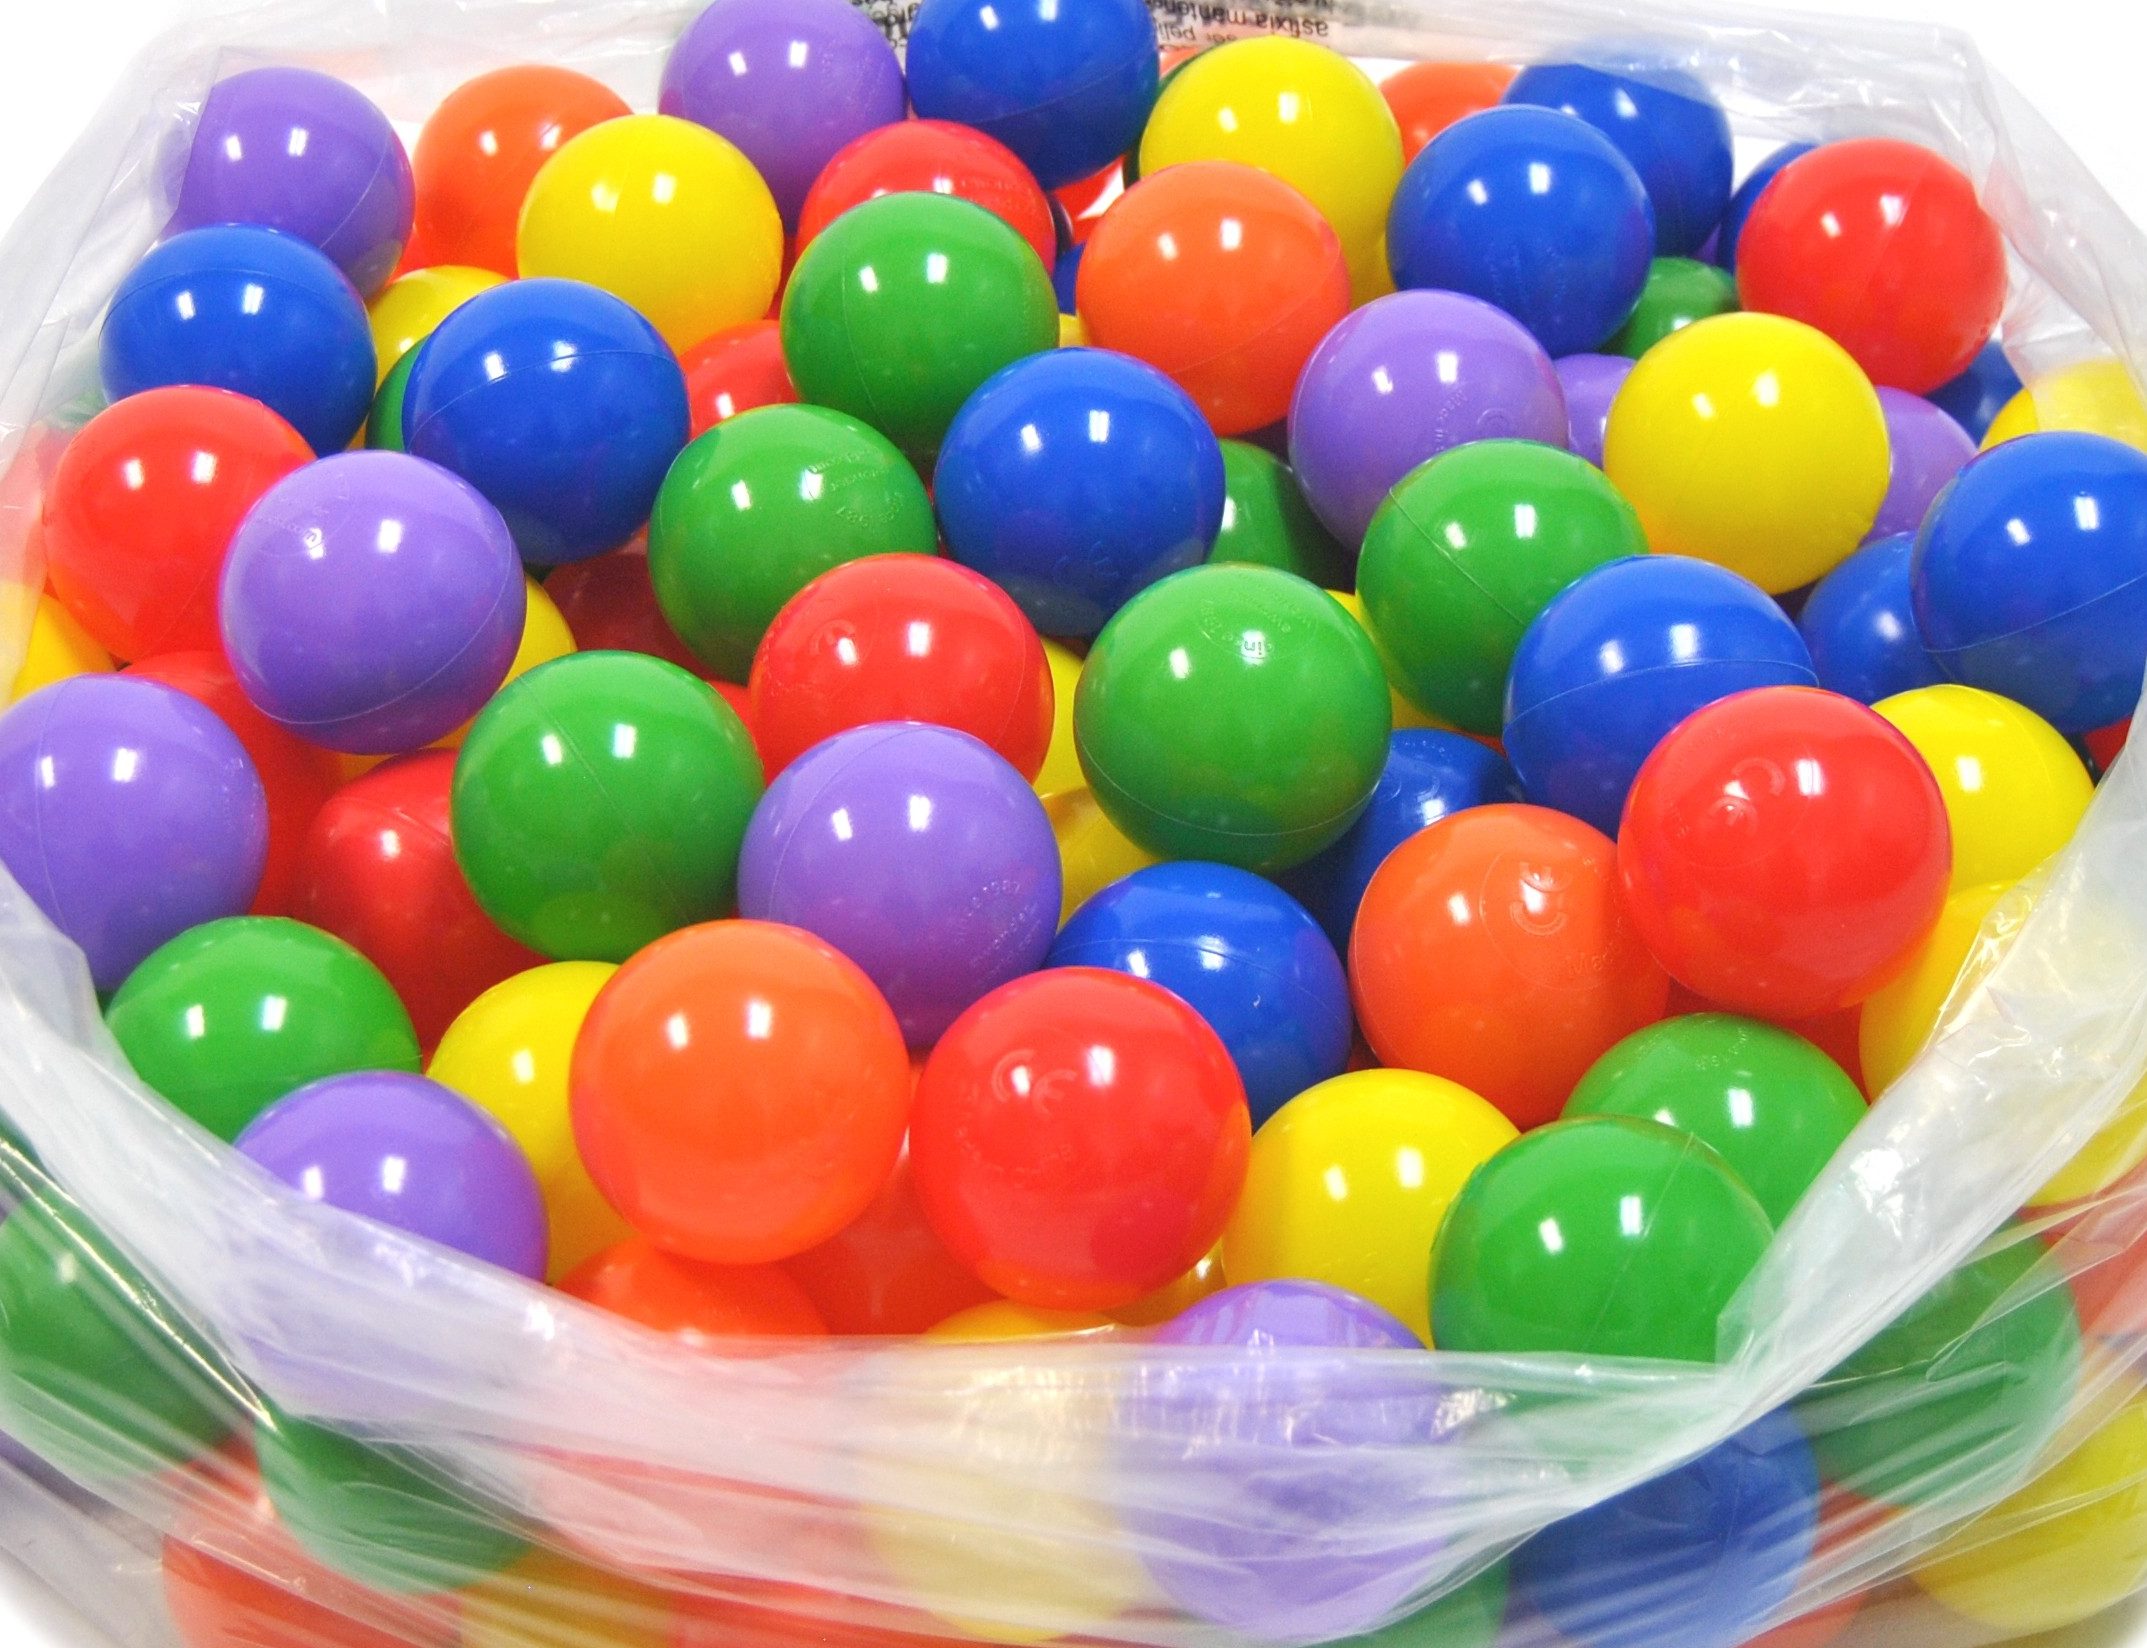 bag of plastic balls